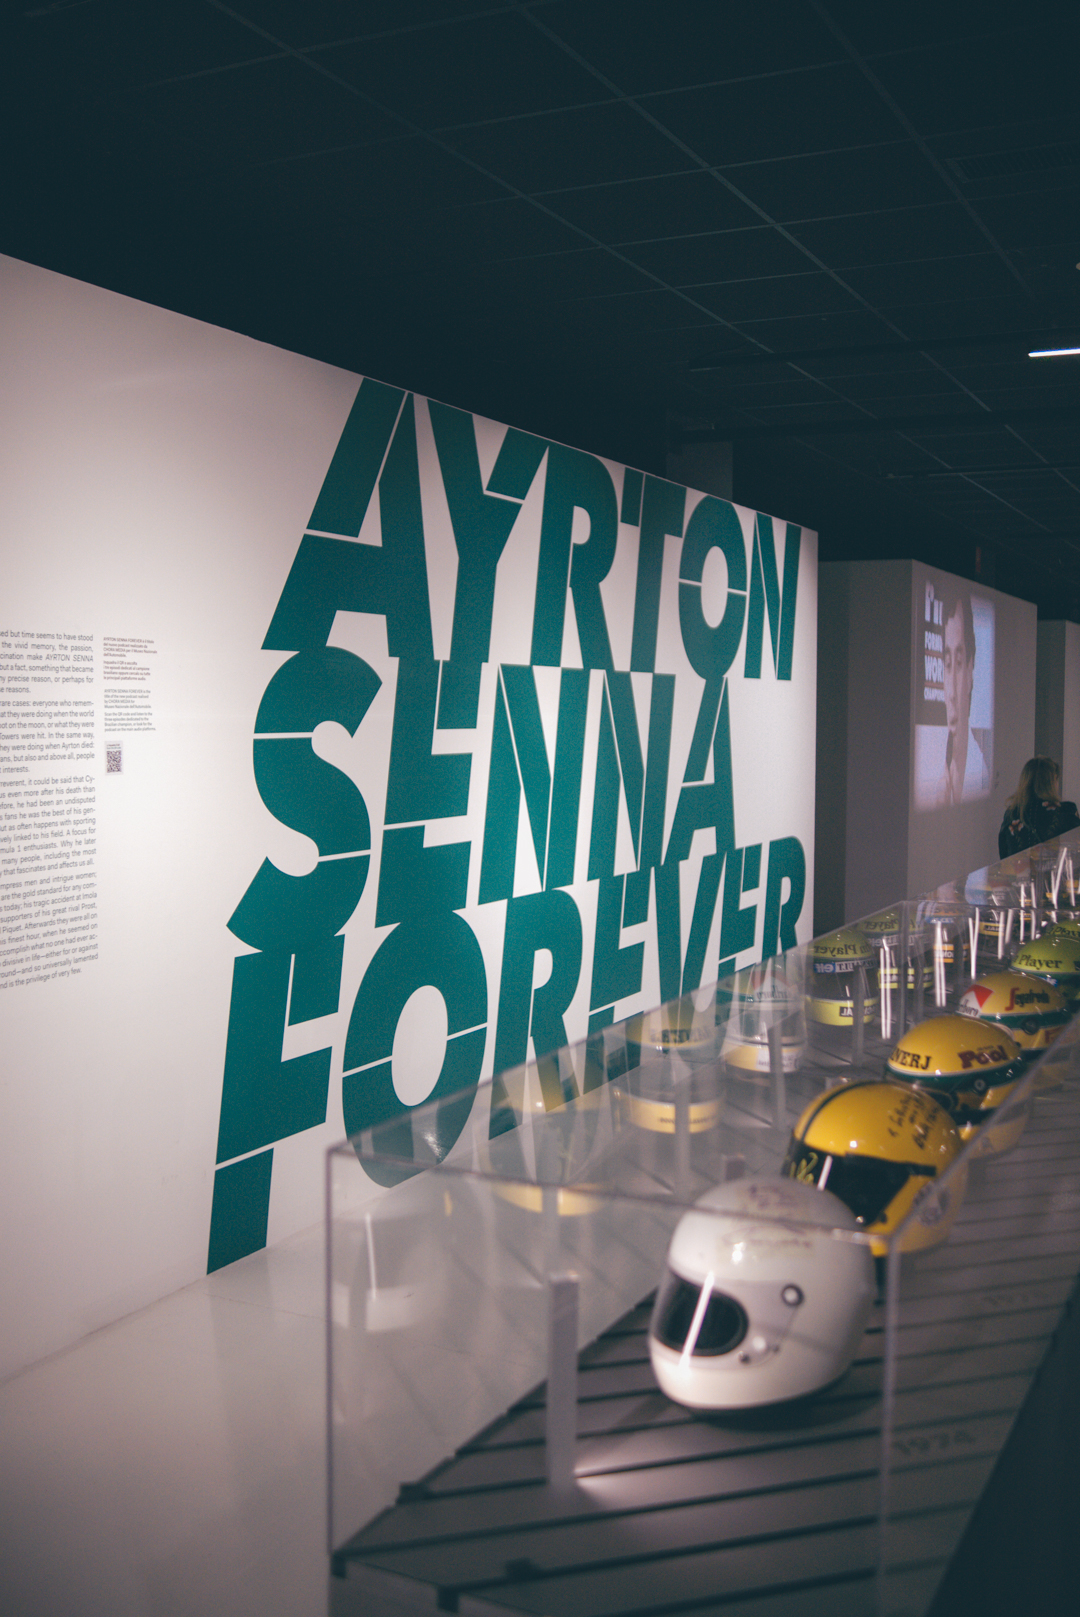 senna_forever_mauto Muestra: Ayrton Senna Forever